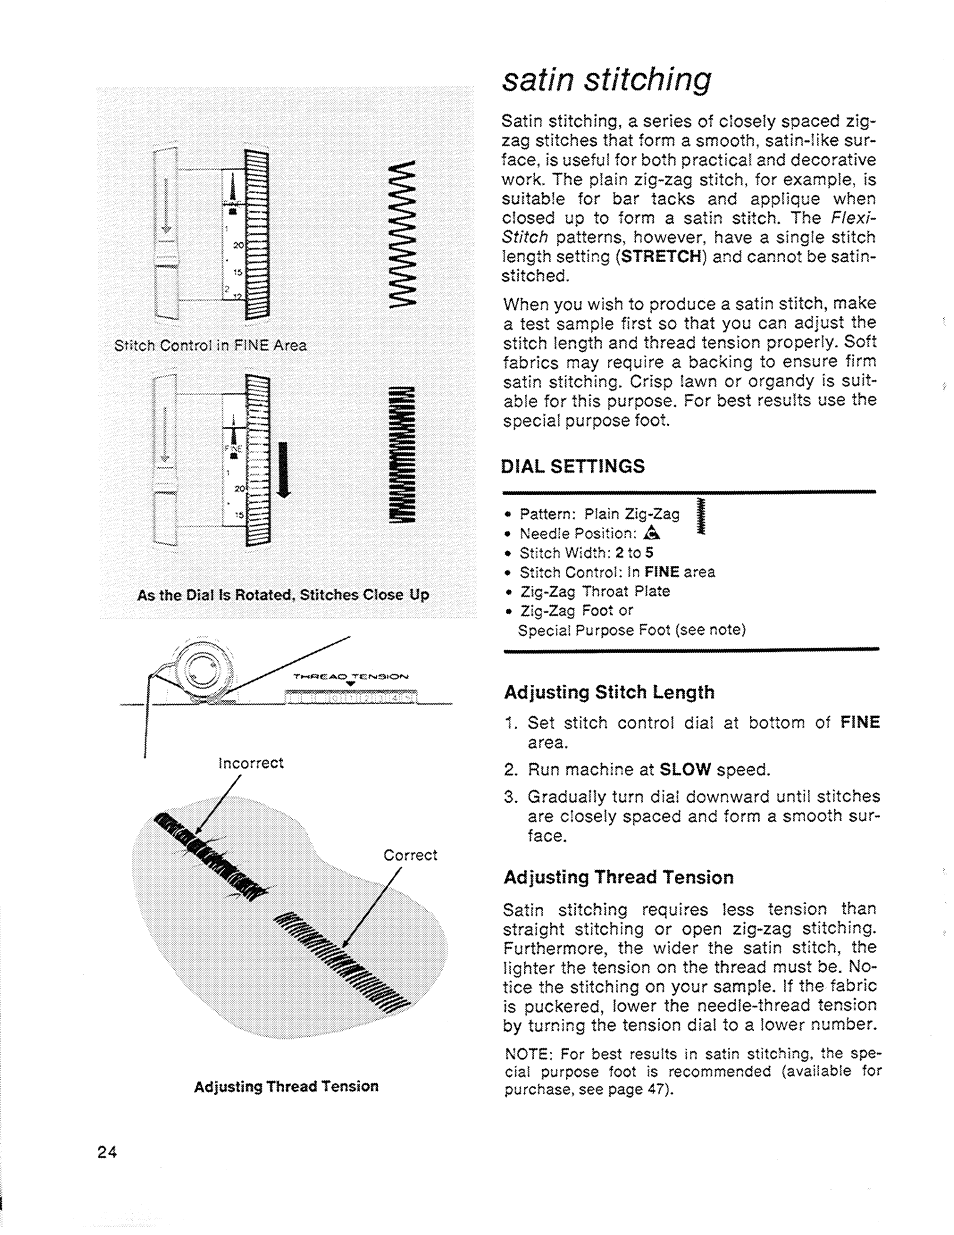 Satin stitching, Dial settings, Adjusting stitch length | Adjusting thread tension | SINGER 714 Graduate User Manual | Page 26 / 52